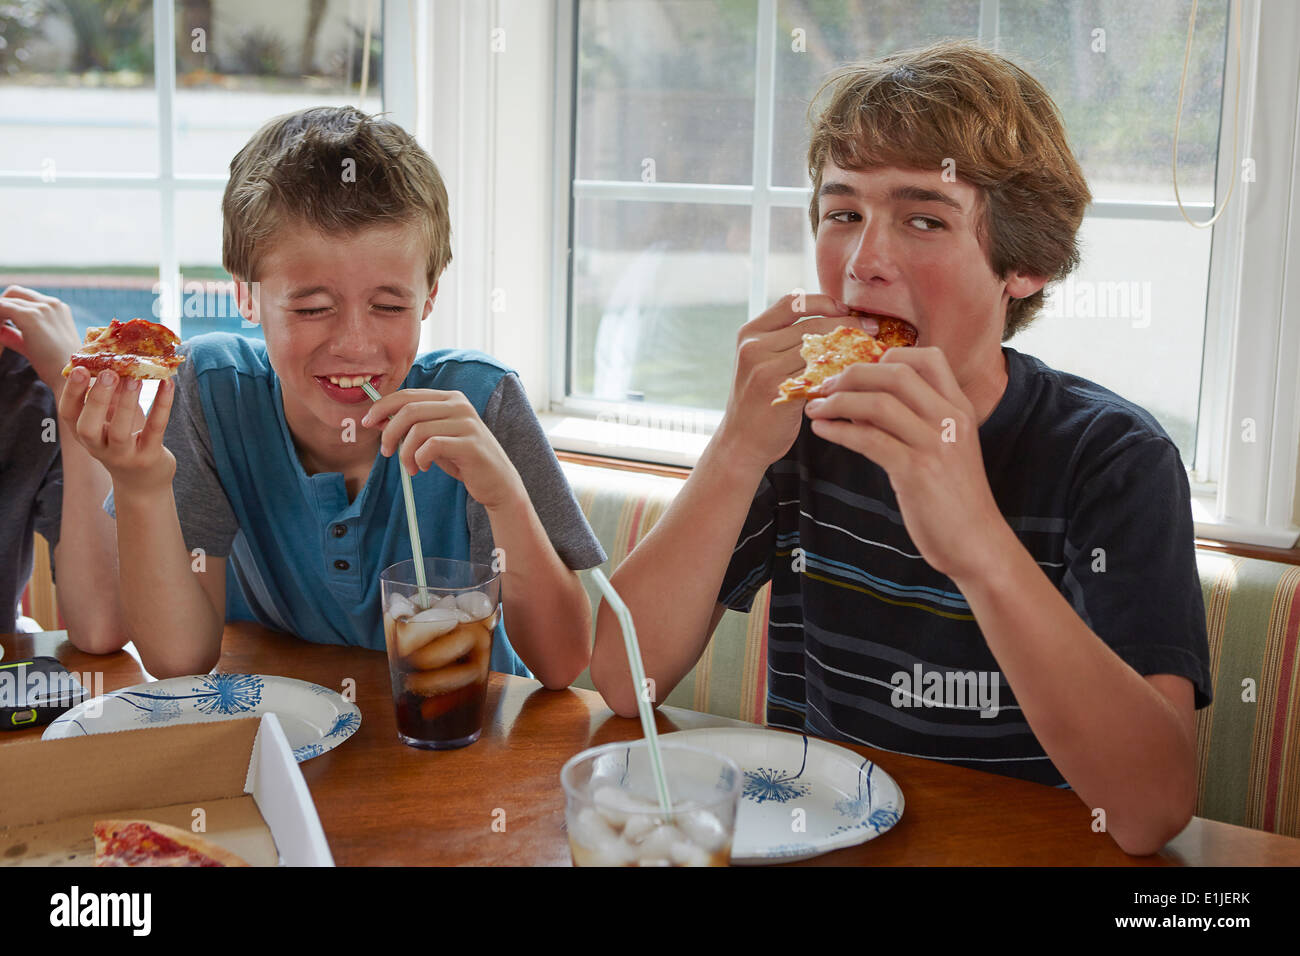 Boys eating pizza Stock Photo